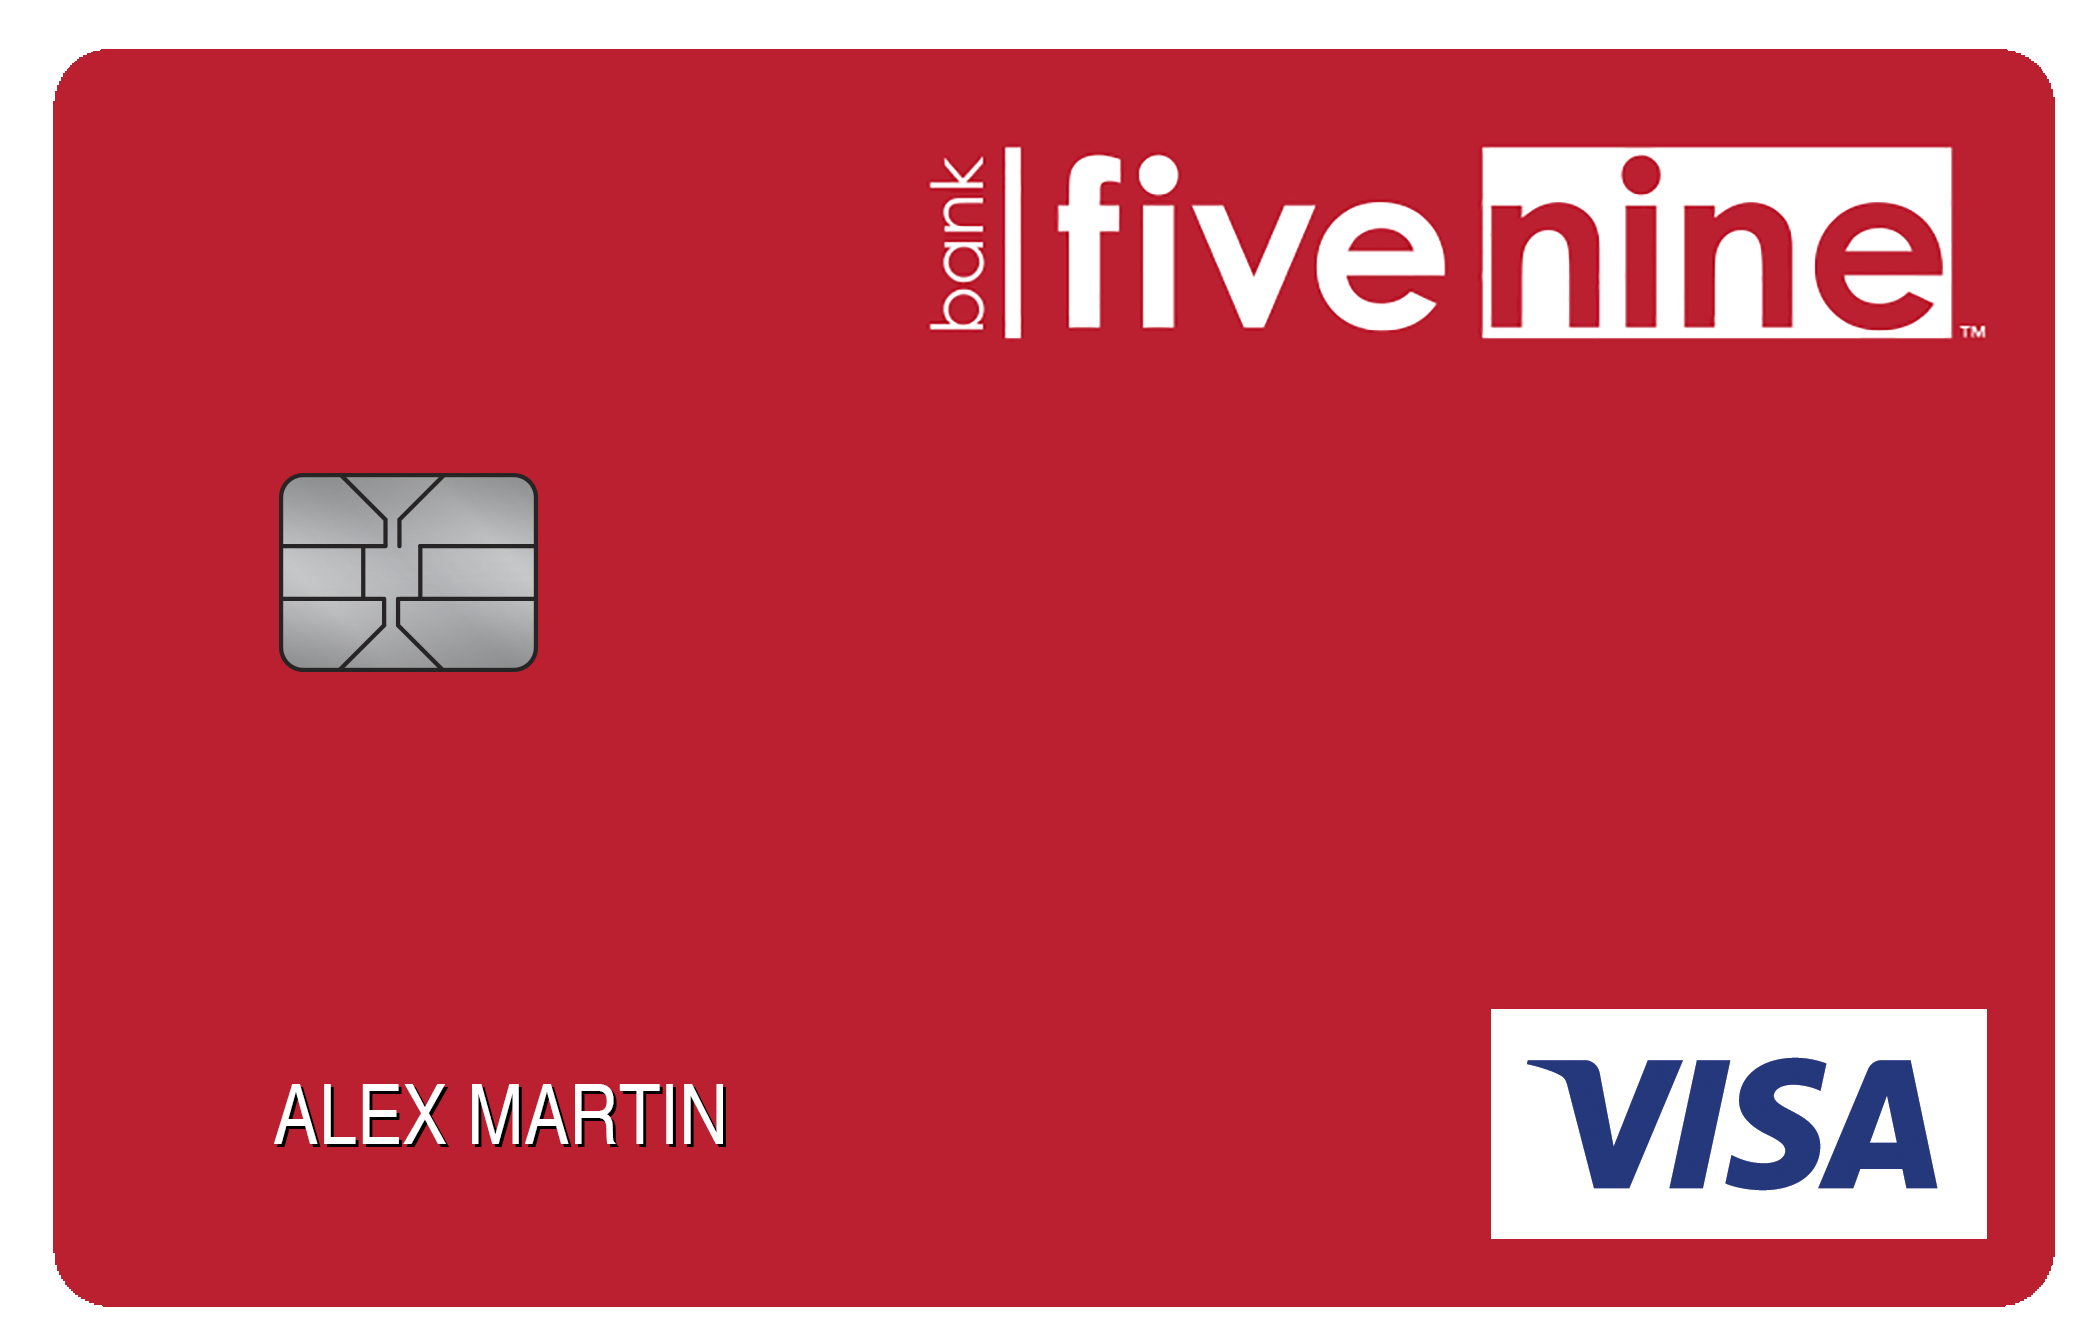 Bank Five Nine